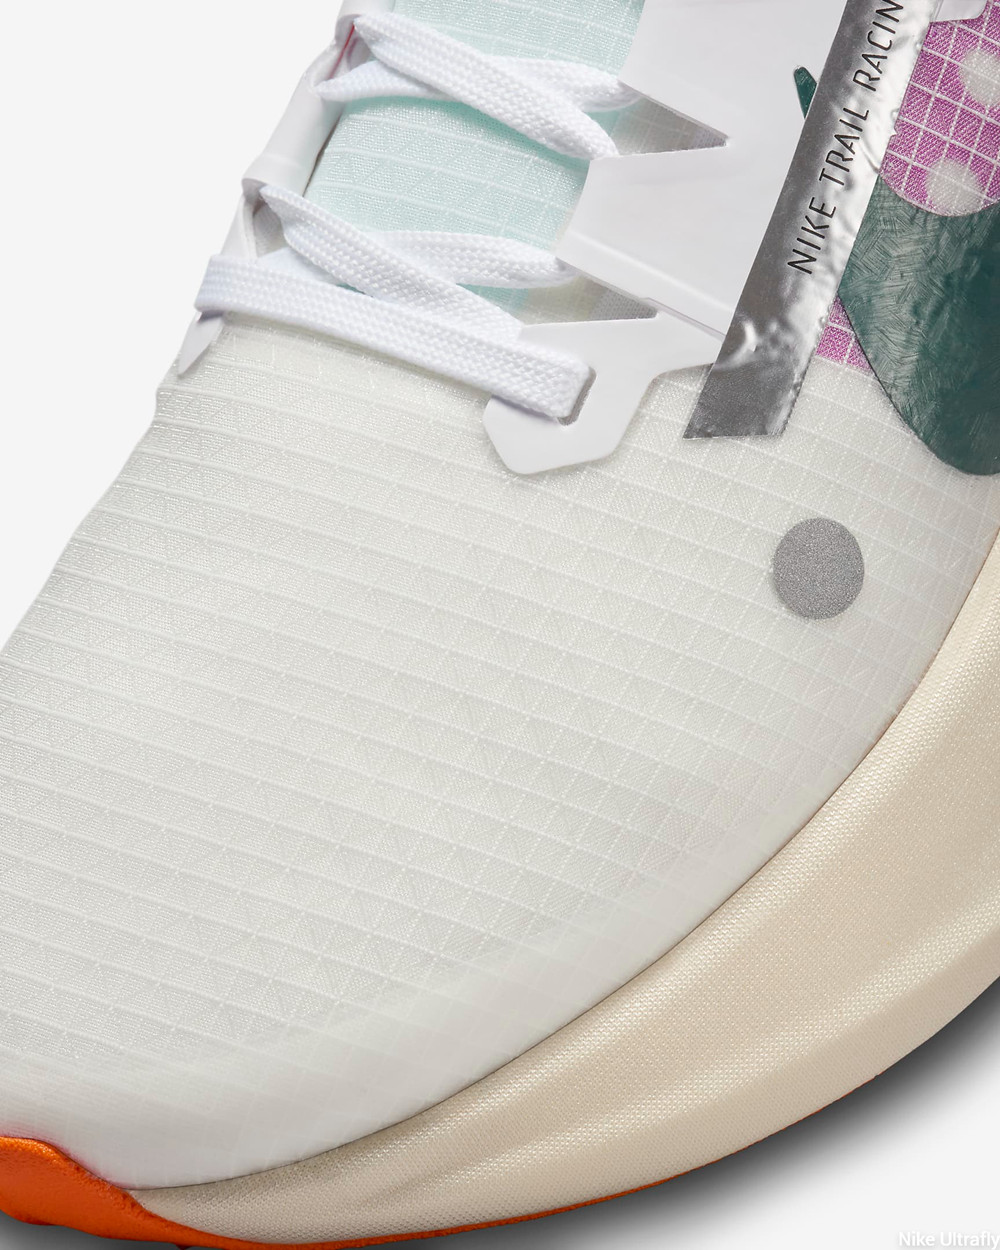 Nike UltraFly toebox